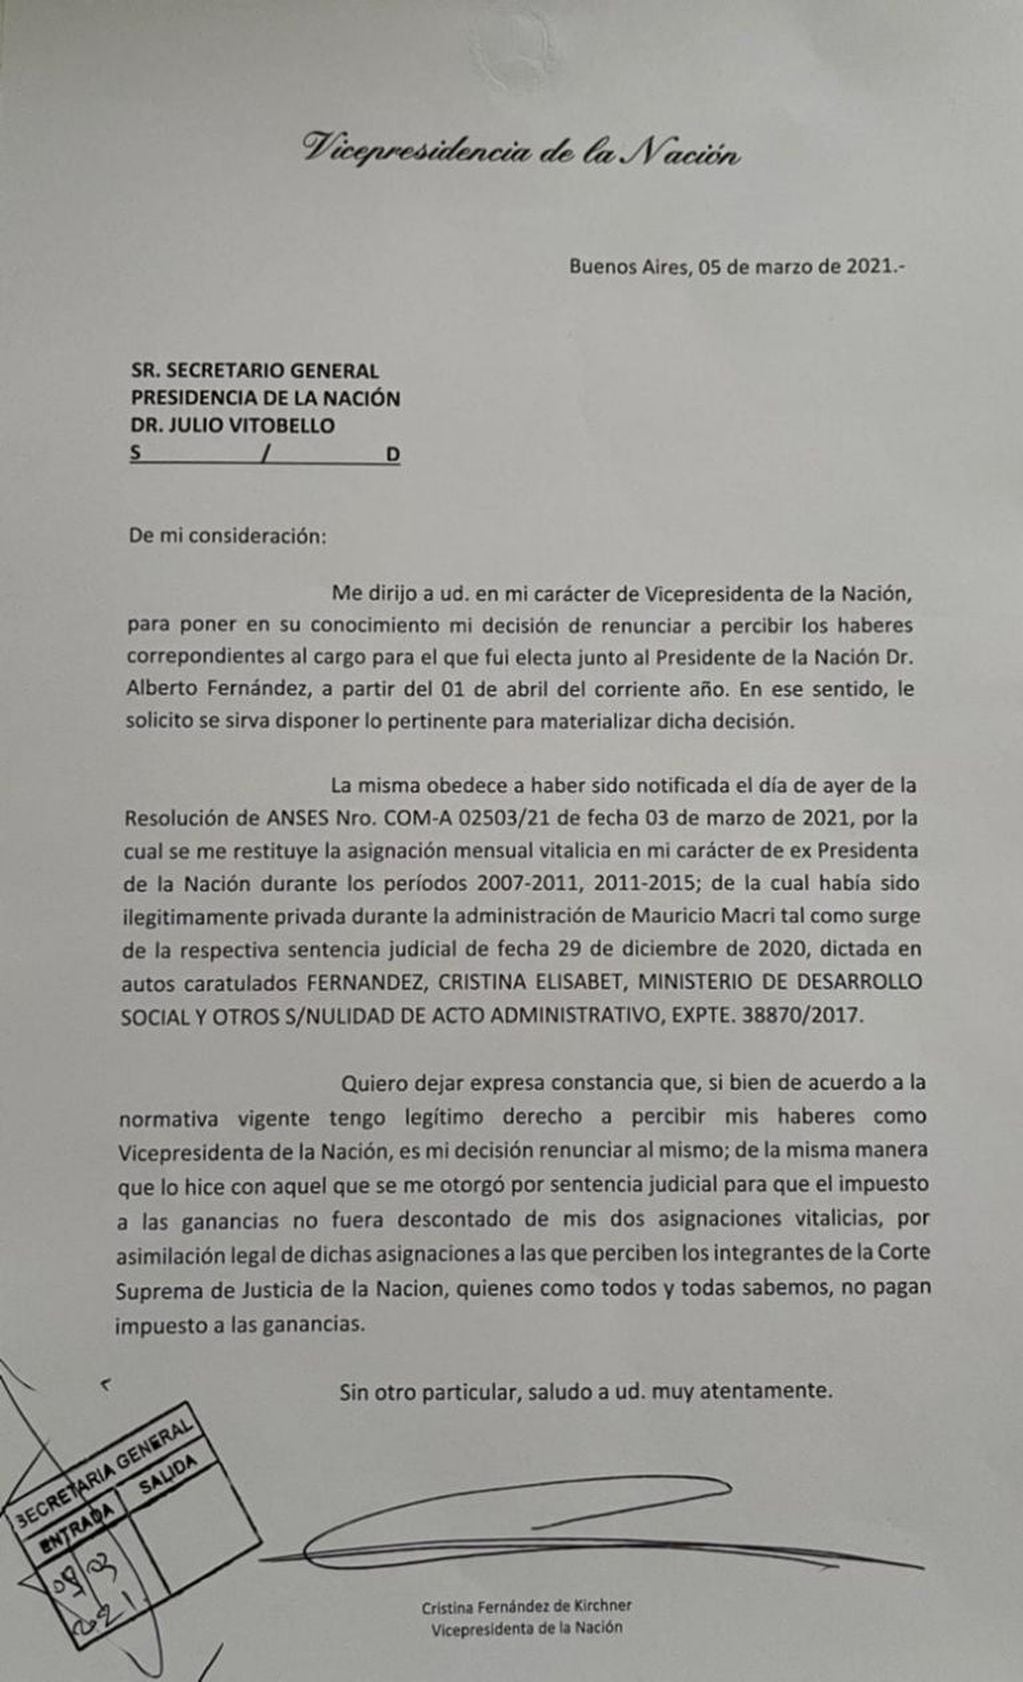 La carta de Cristina Kirchner para el secretario General de la Presidencia, Julio Vitobello.